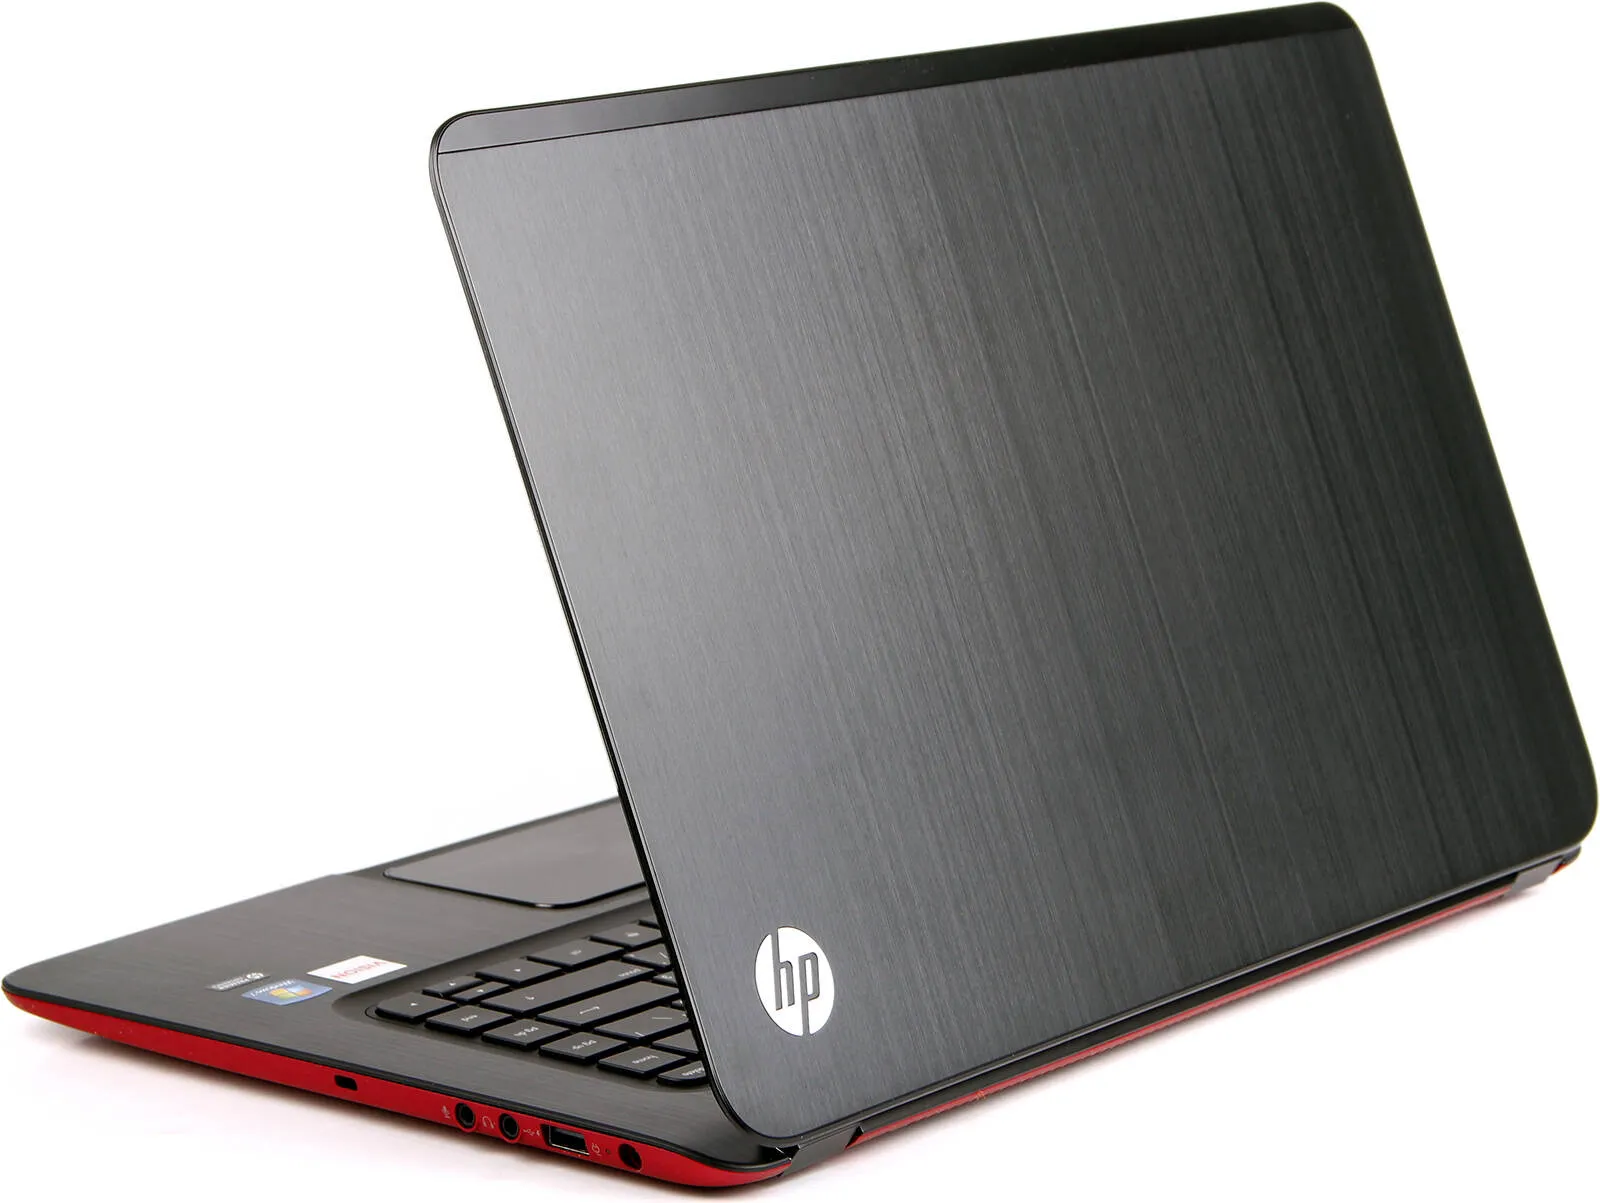 Ноутбук HP 250 G6 /Celeron 3060/4 GB DDR3/ 500GB HDD /15.6" HD LED/Intel HD Graphics 5500/ DVD / RUS#2